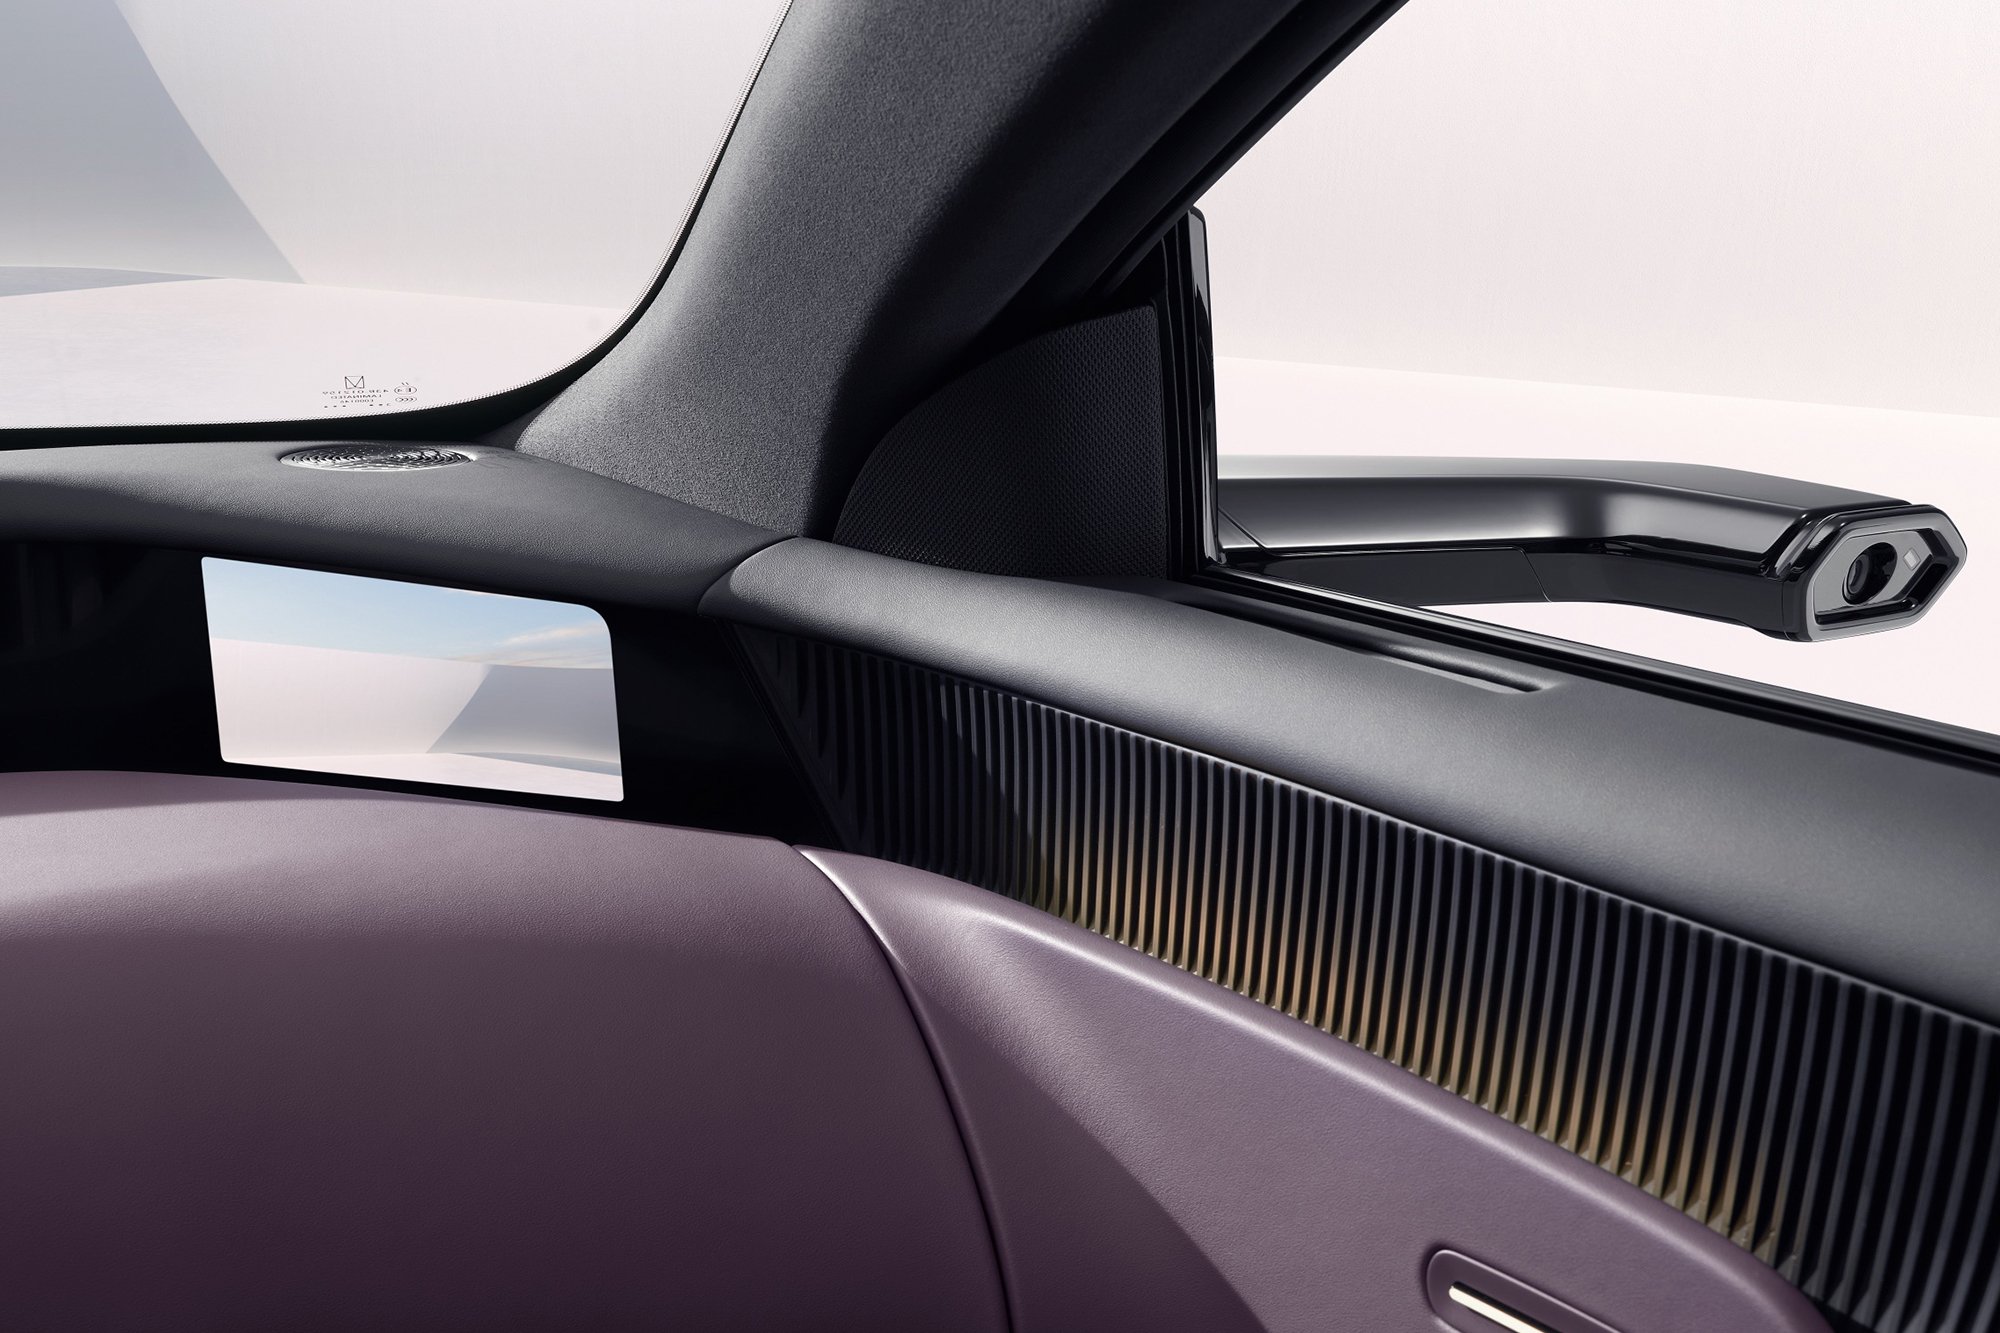 The minimalist interior design with Intelligent door mirrors in the AVATR 12 